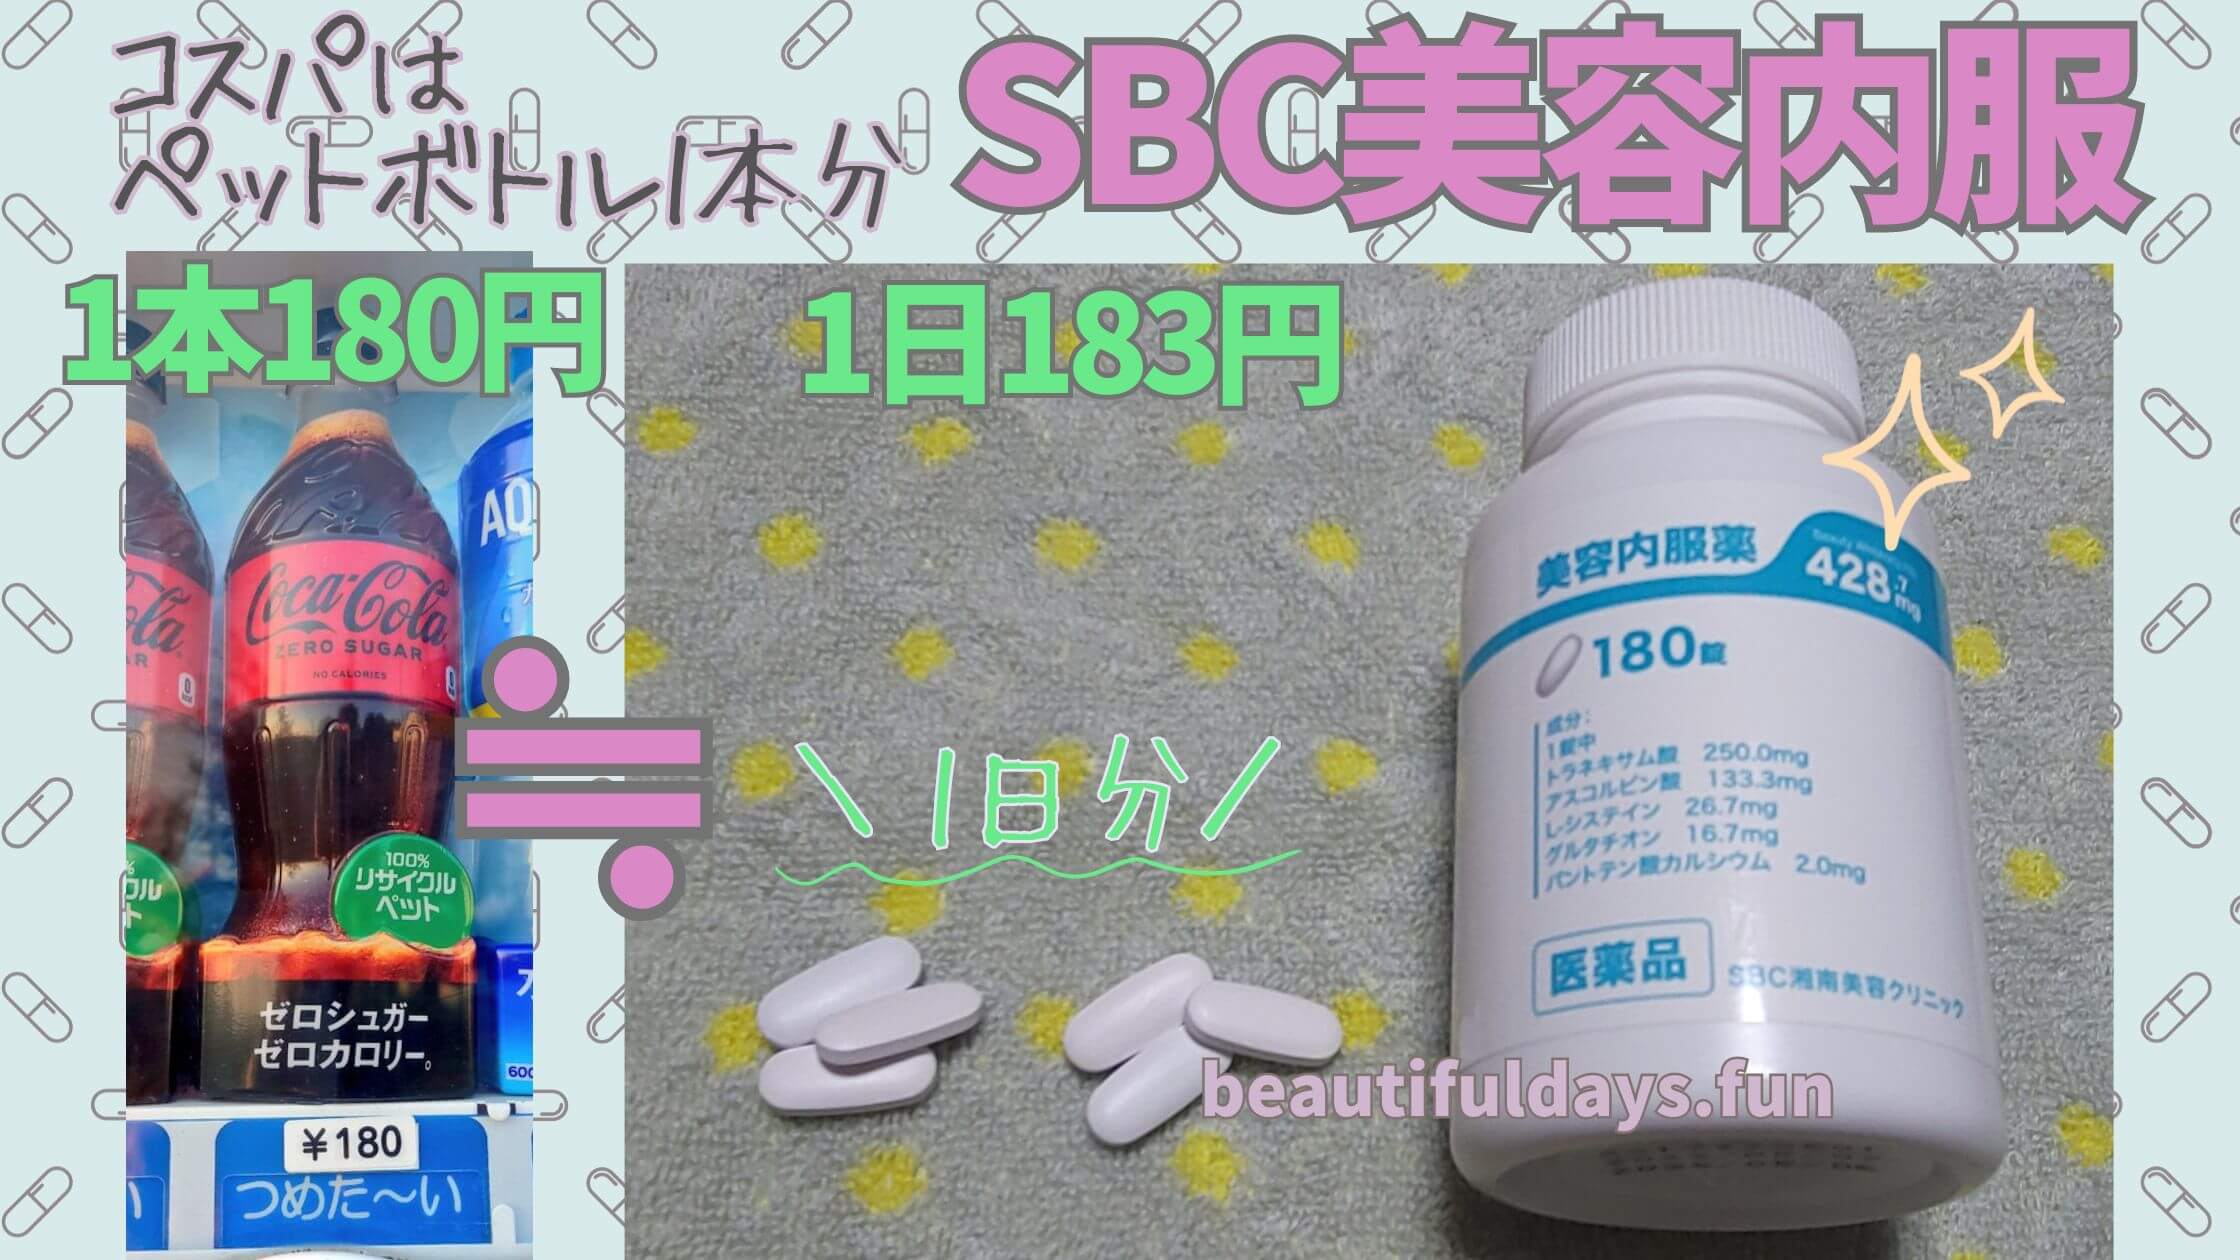 SBC-beauty supplements (1)